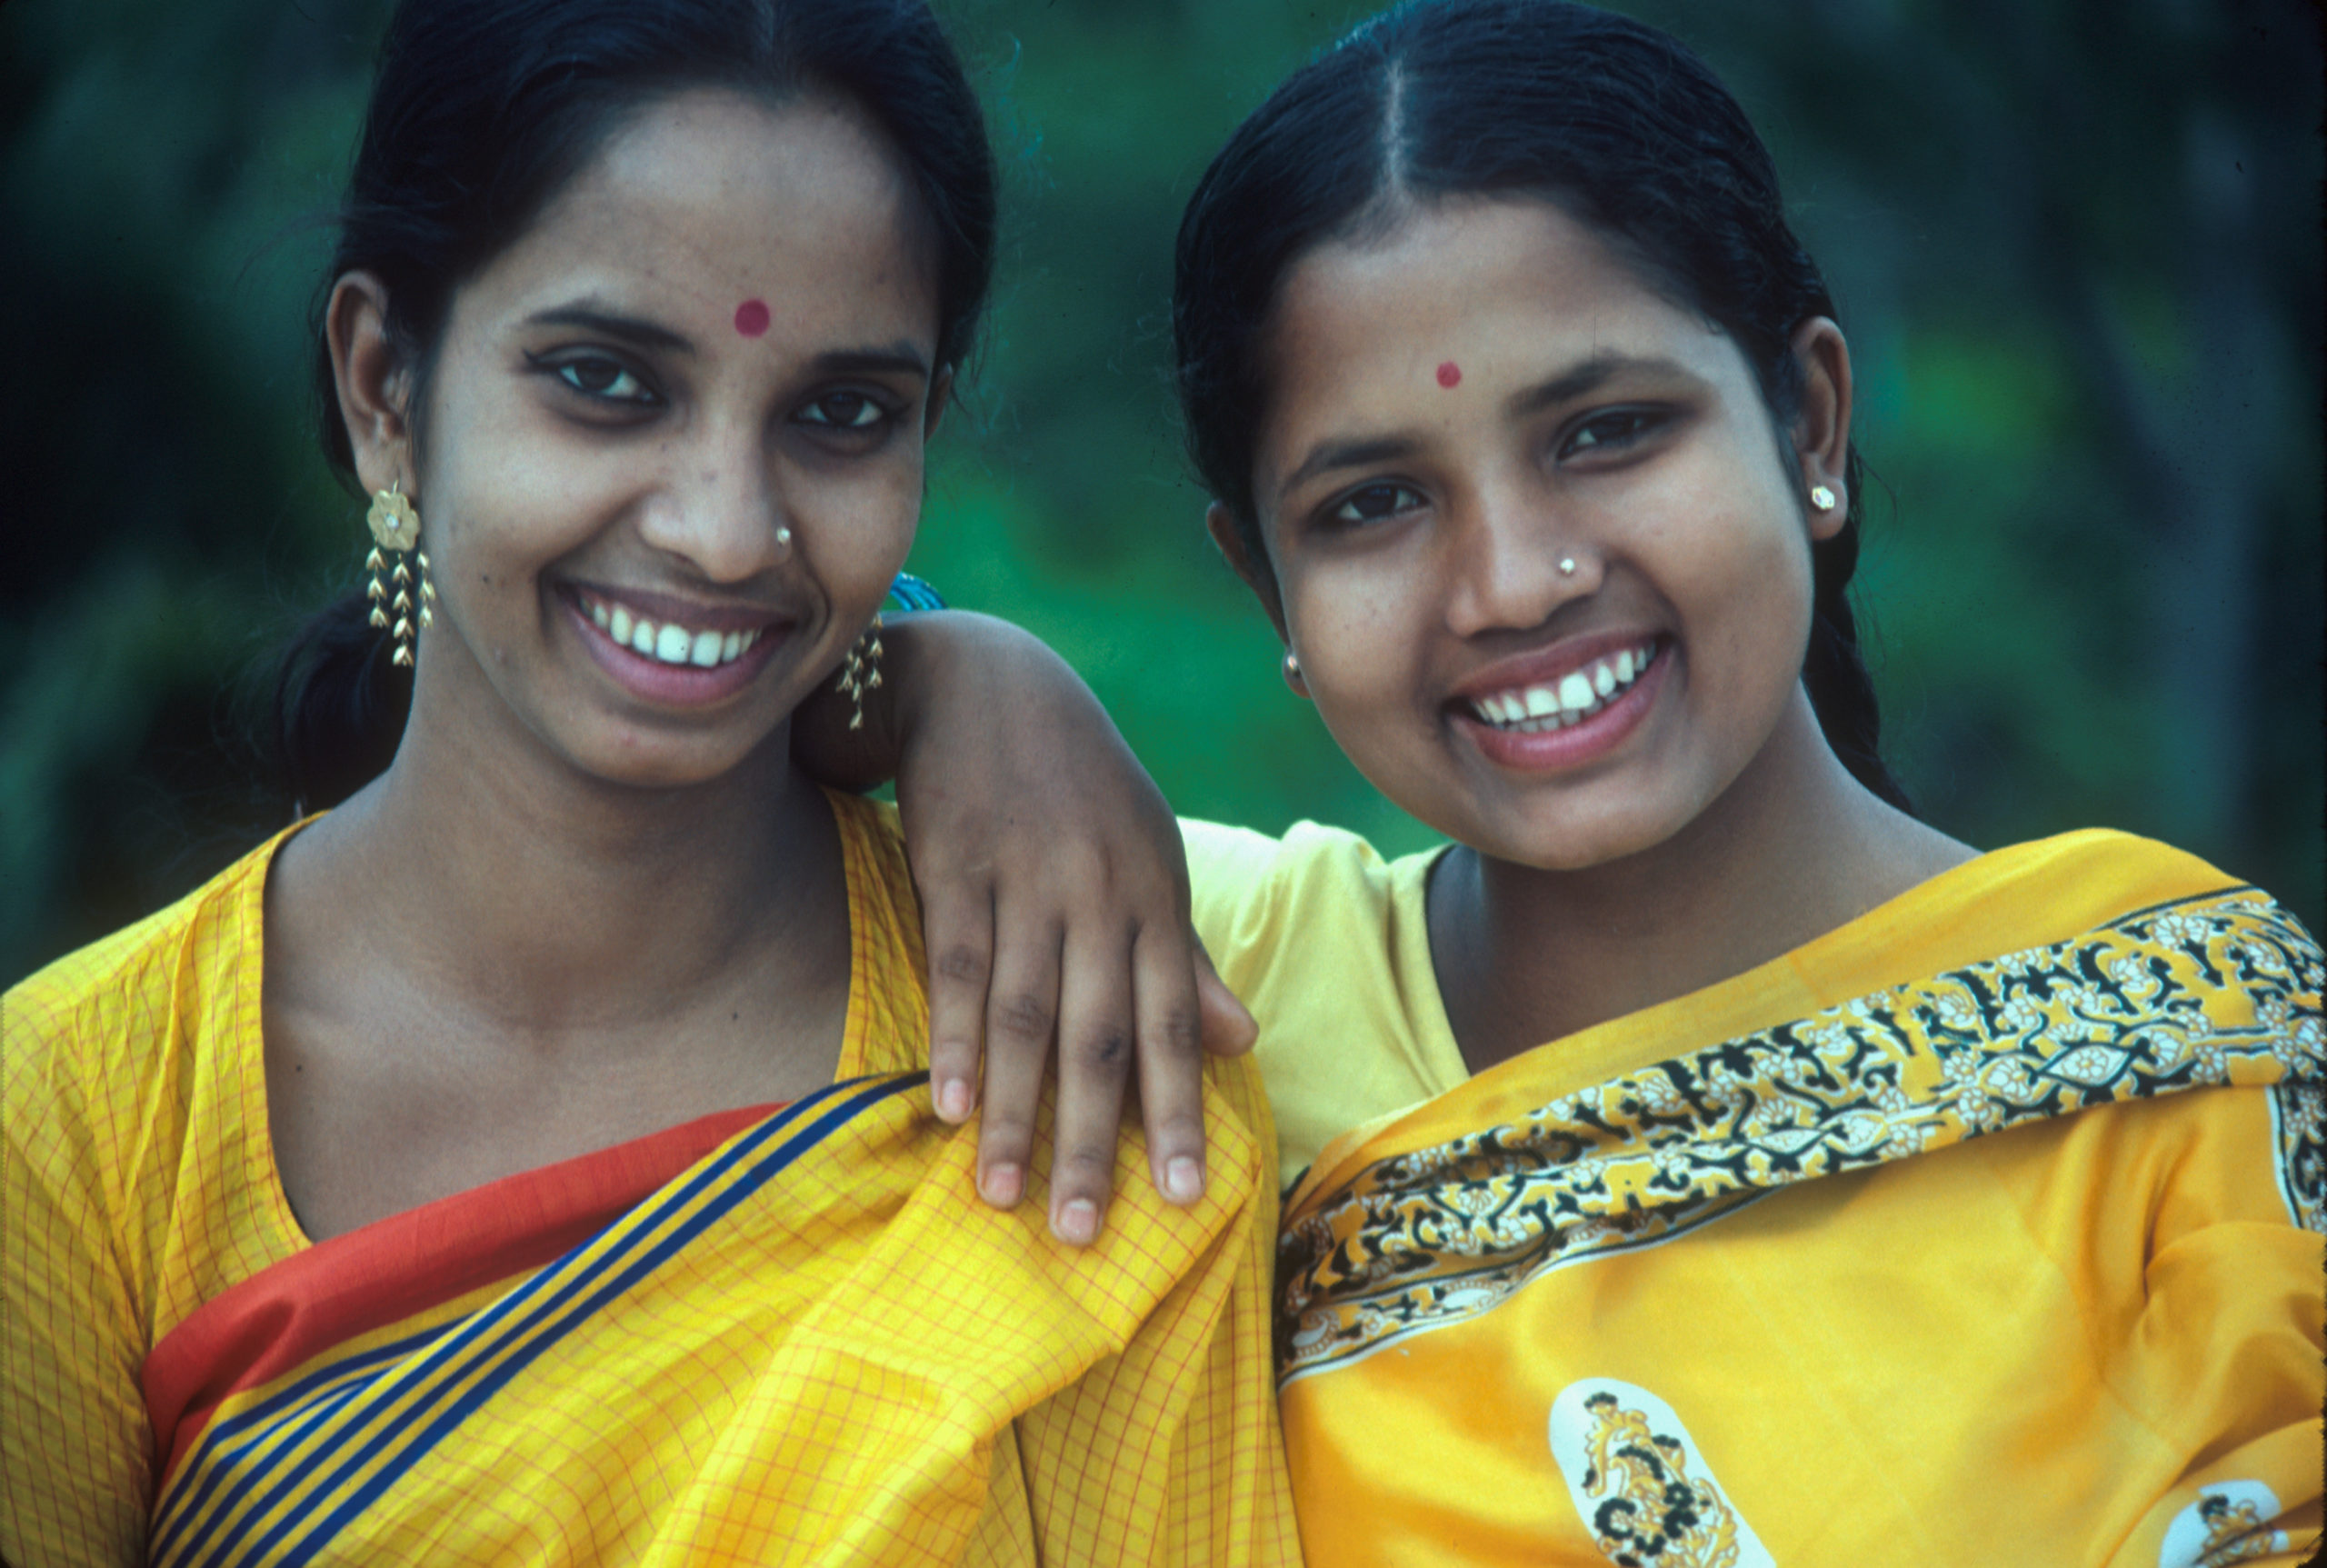 Young girls in Bangladesh